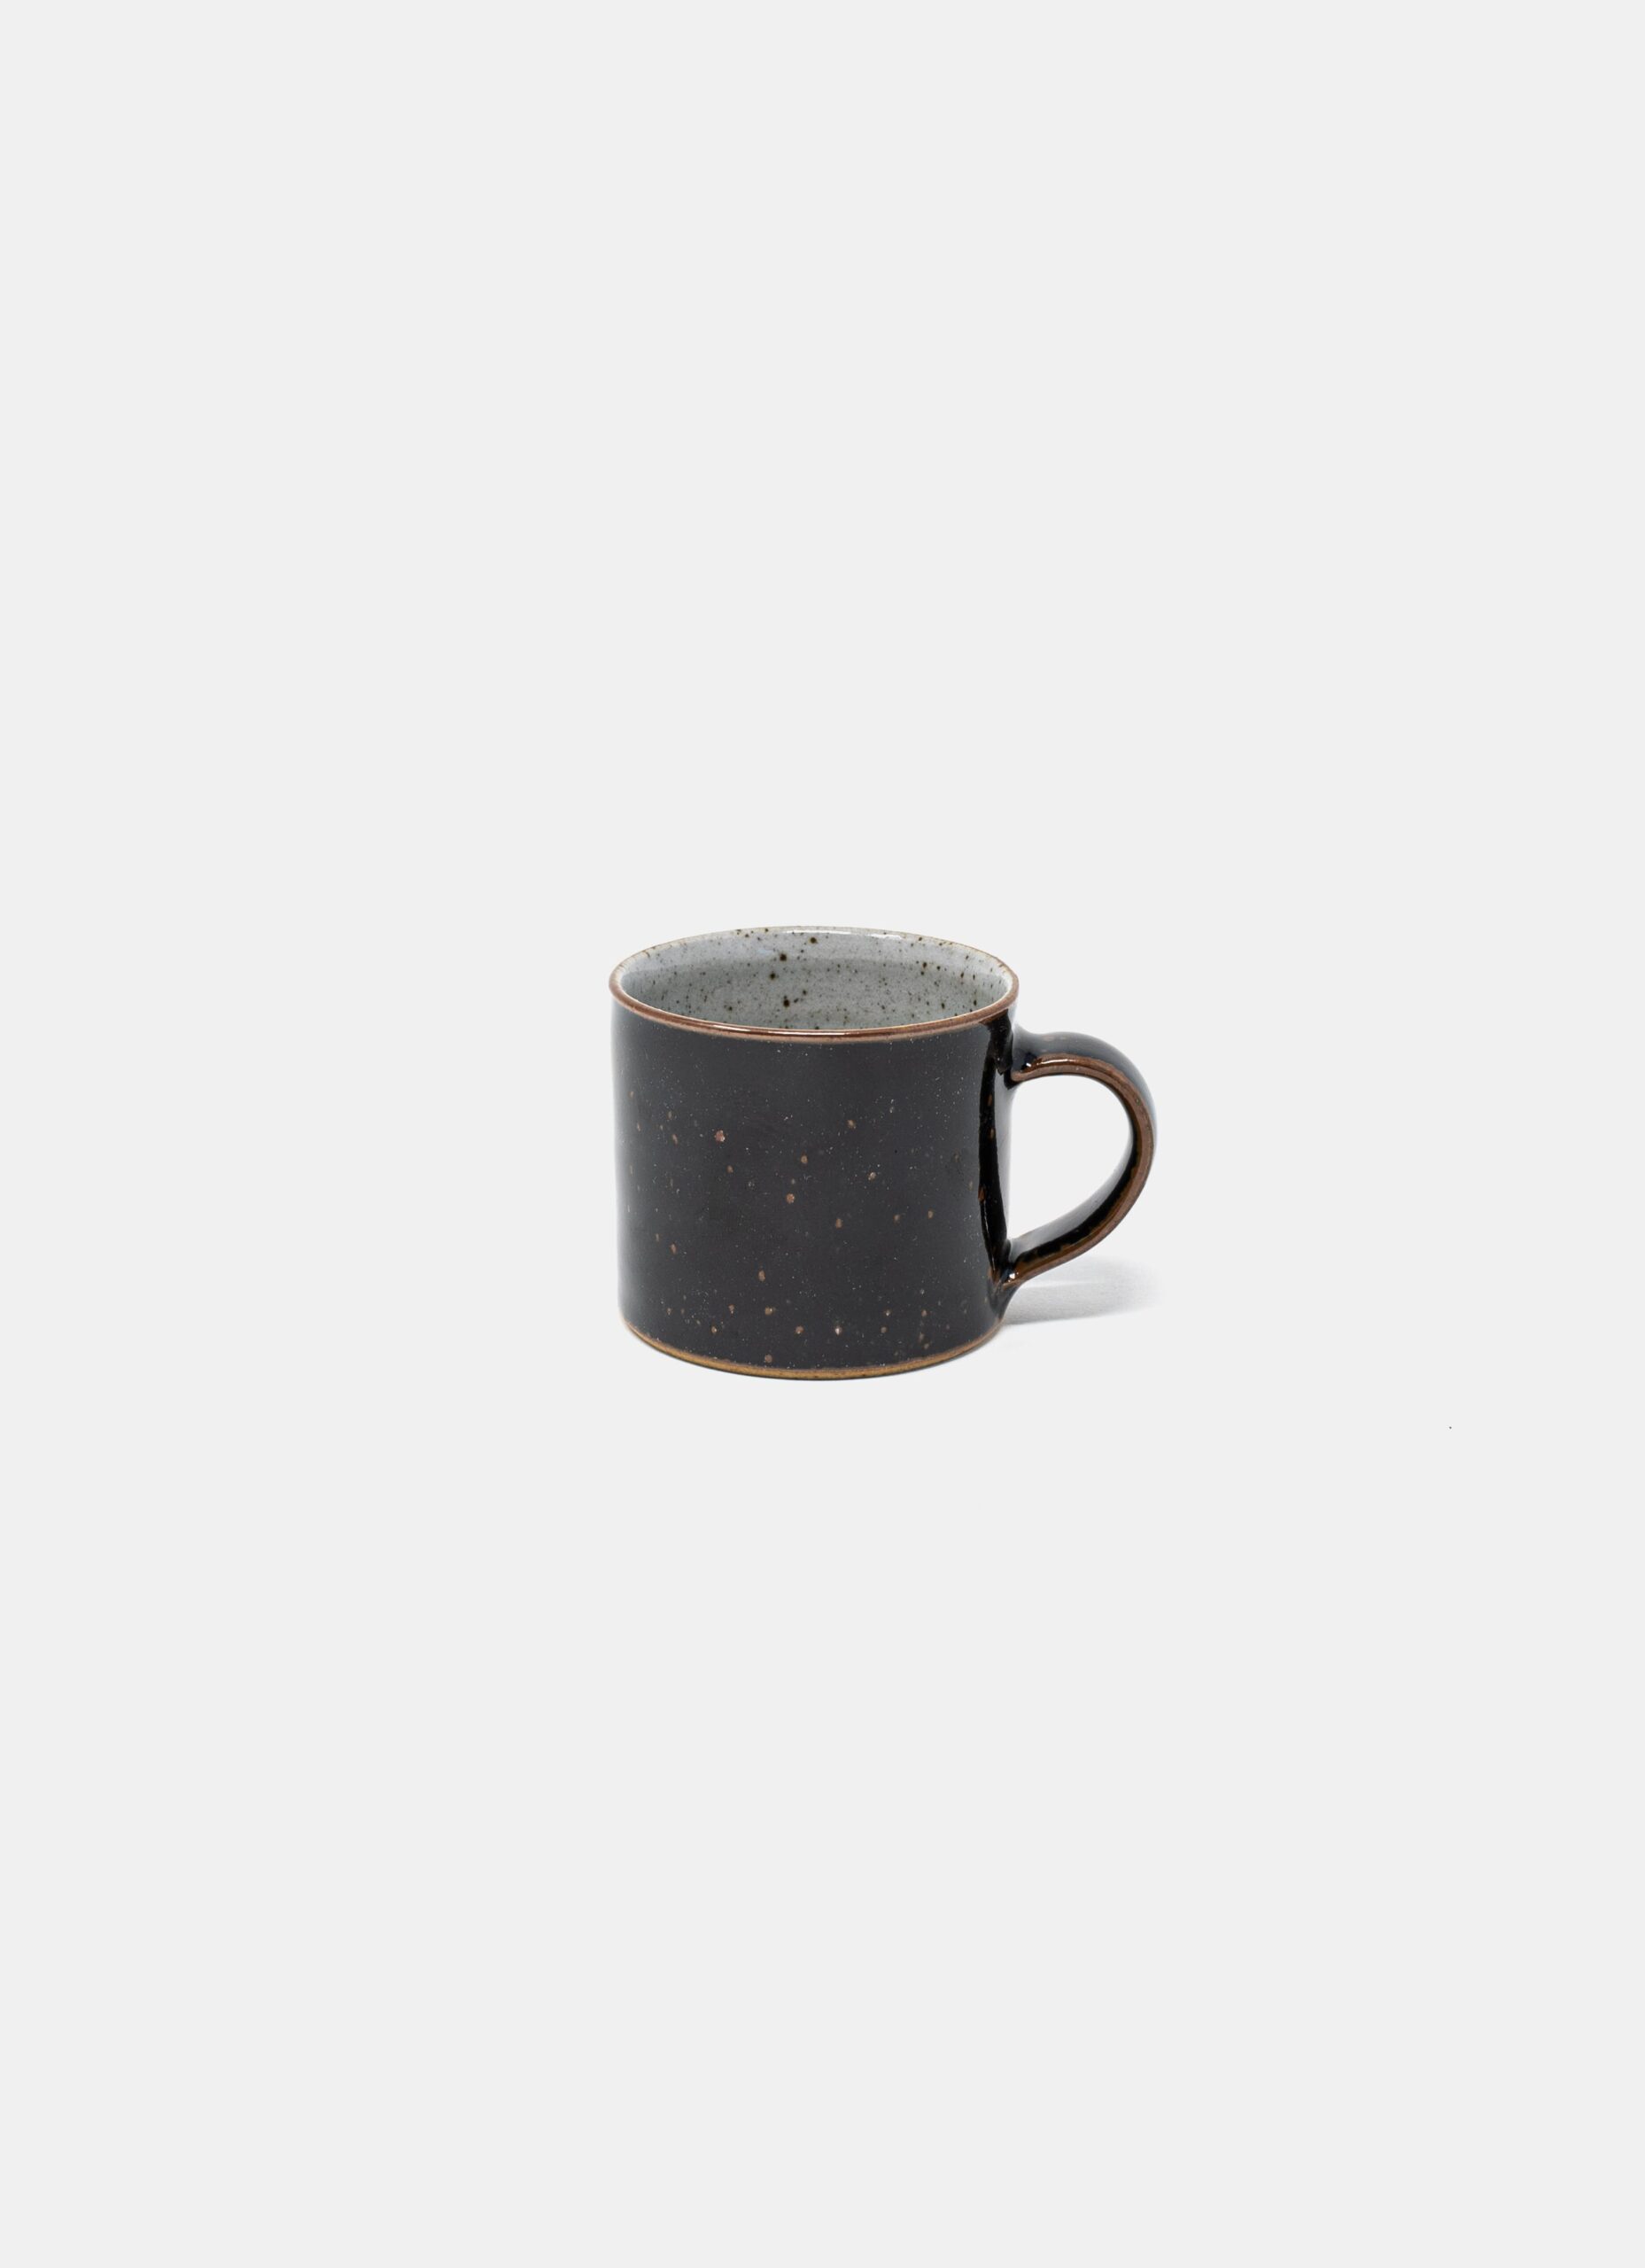 James and Tilla Waters - Hand- thrown Stoneware - Espresso cup - Tenmoku glaze